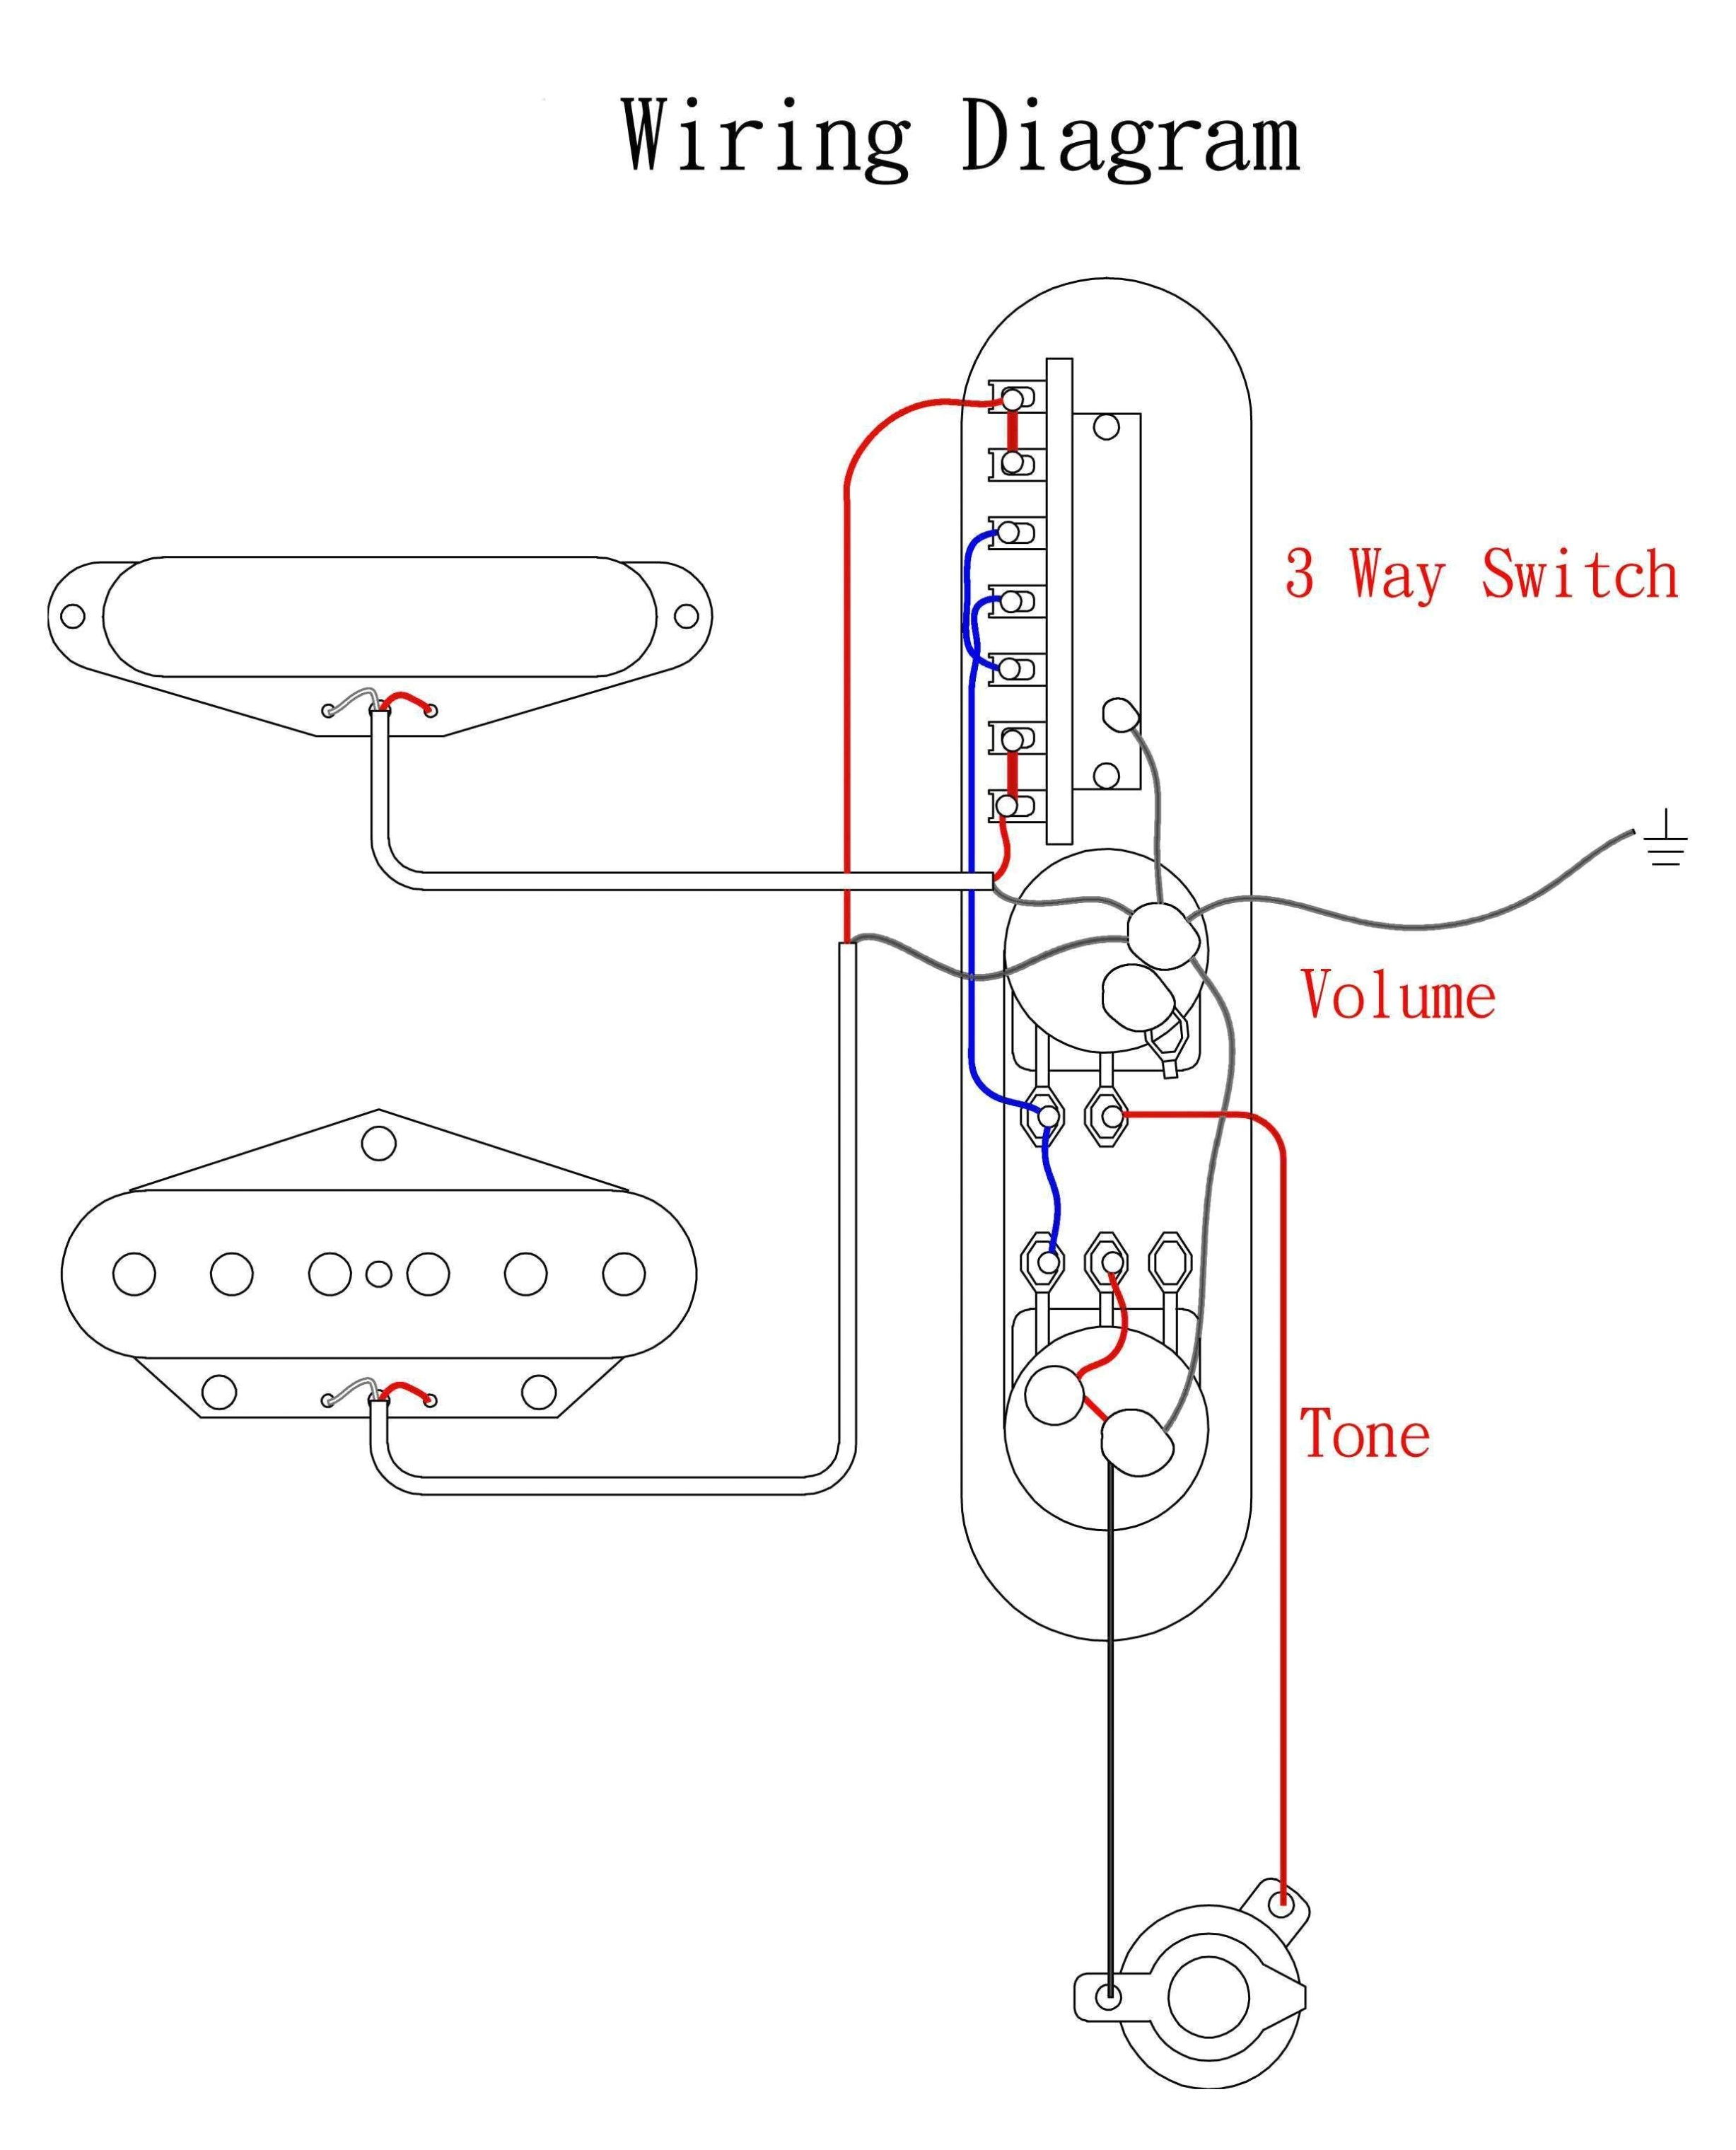 3 way switch wiring telecaster diagram stewmac daily electronical 3 way switch wiring telecaster diagram stewmac